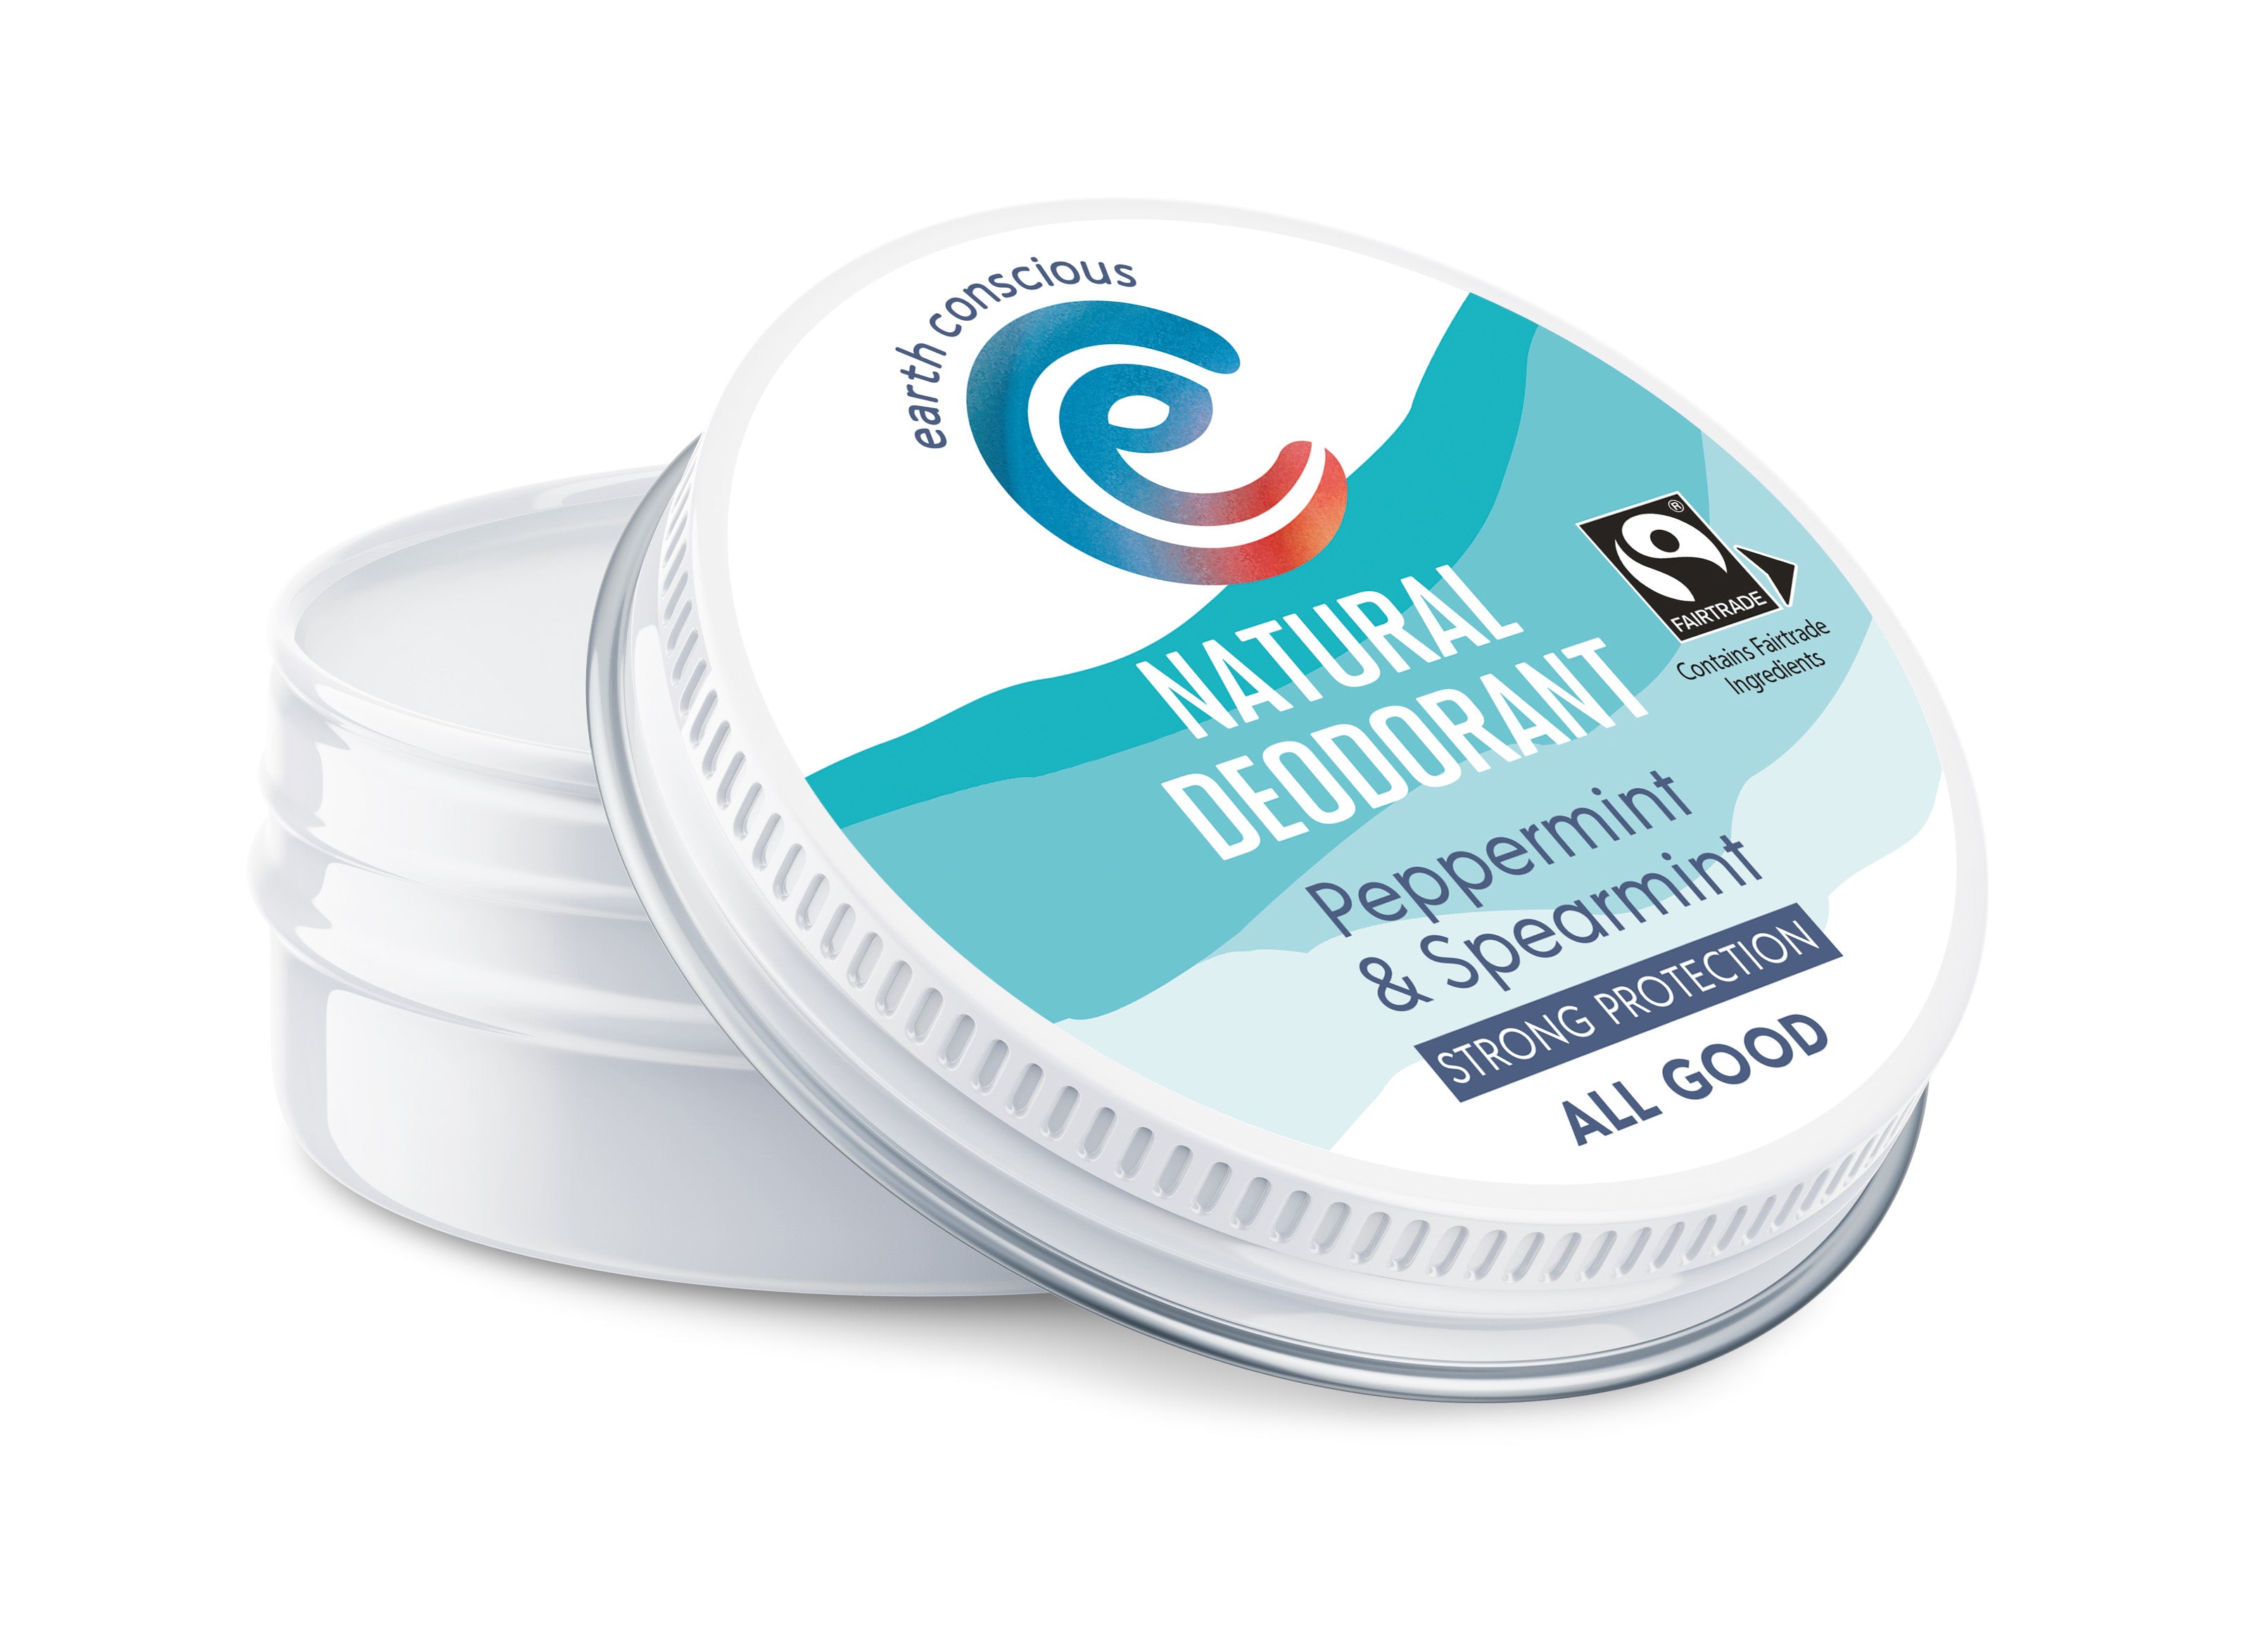 Earth Conscious Delicate Deodorant Mint